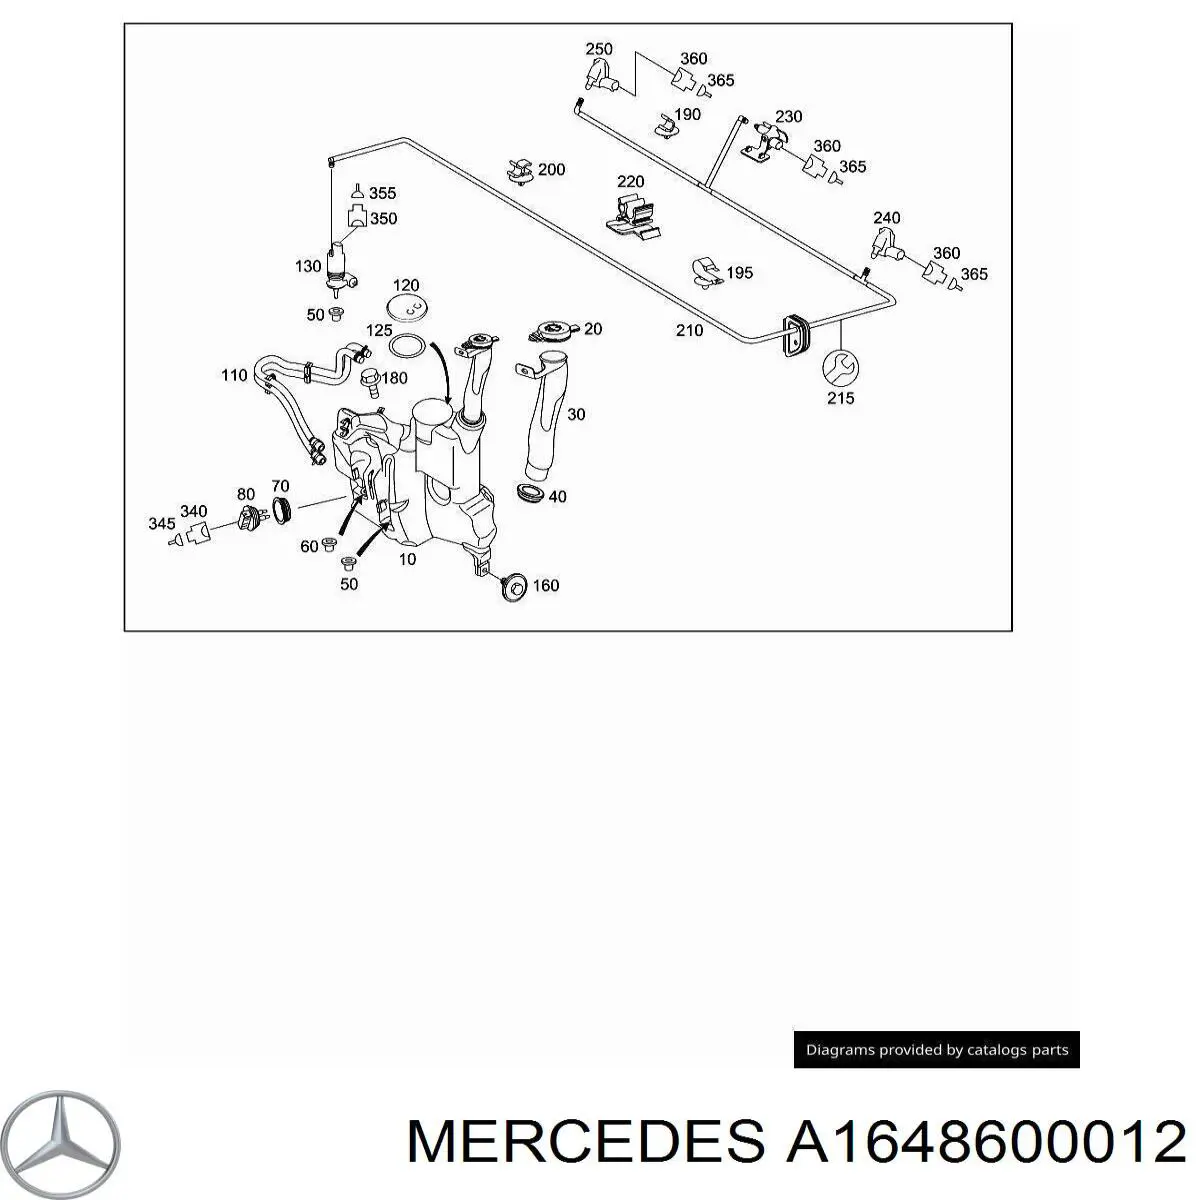 A1648600012 Mercedes 